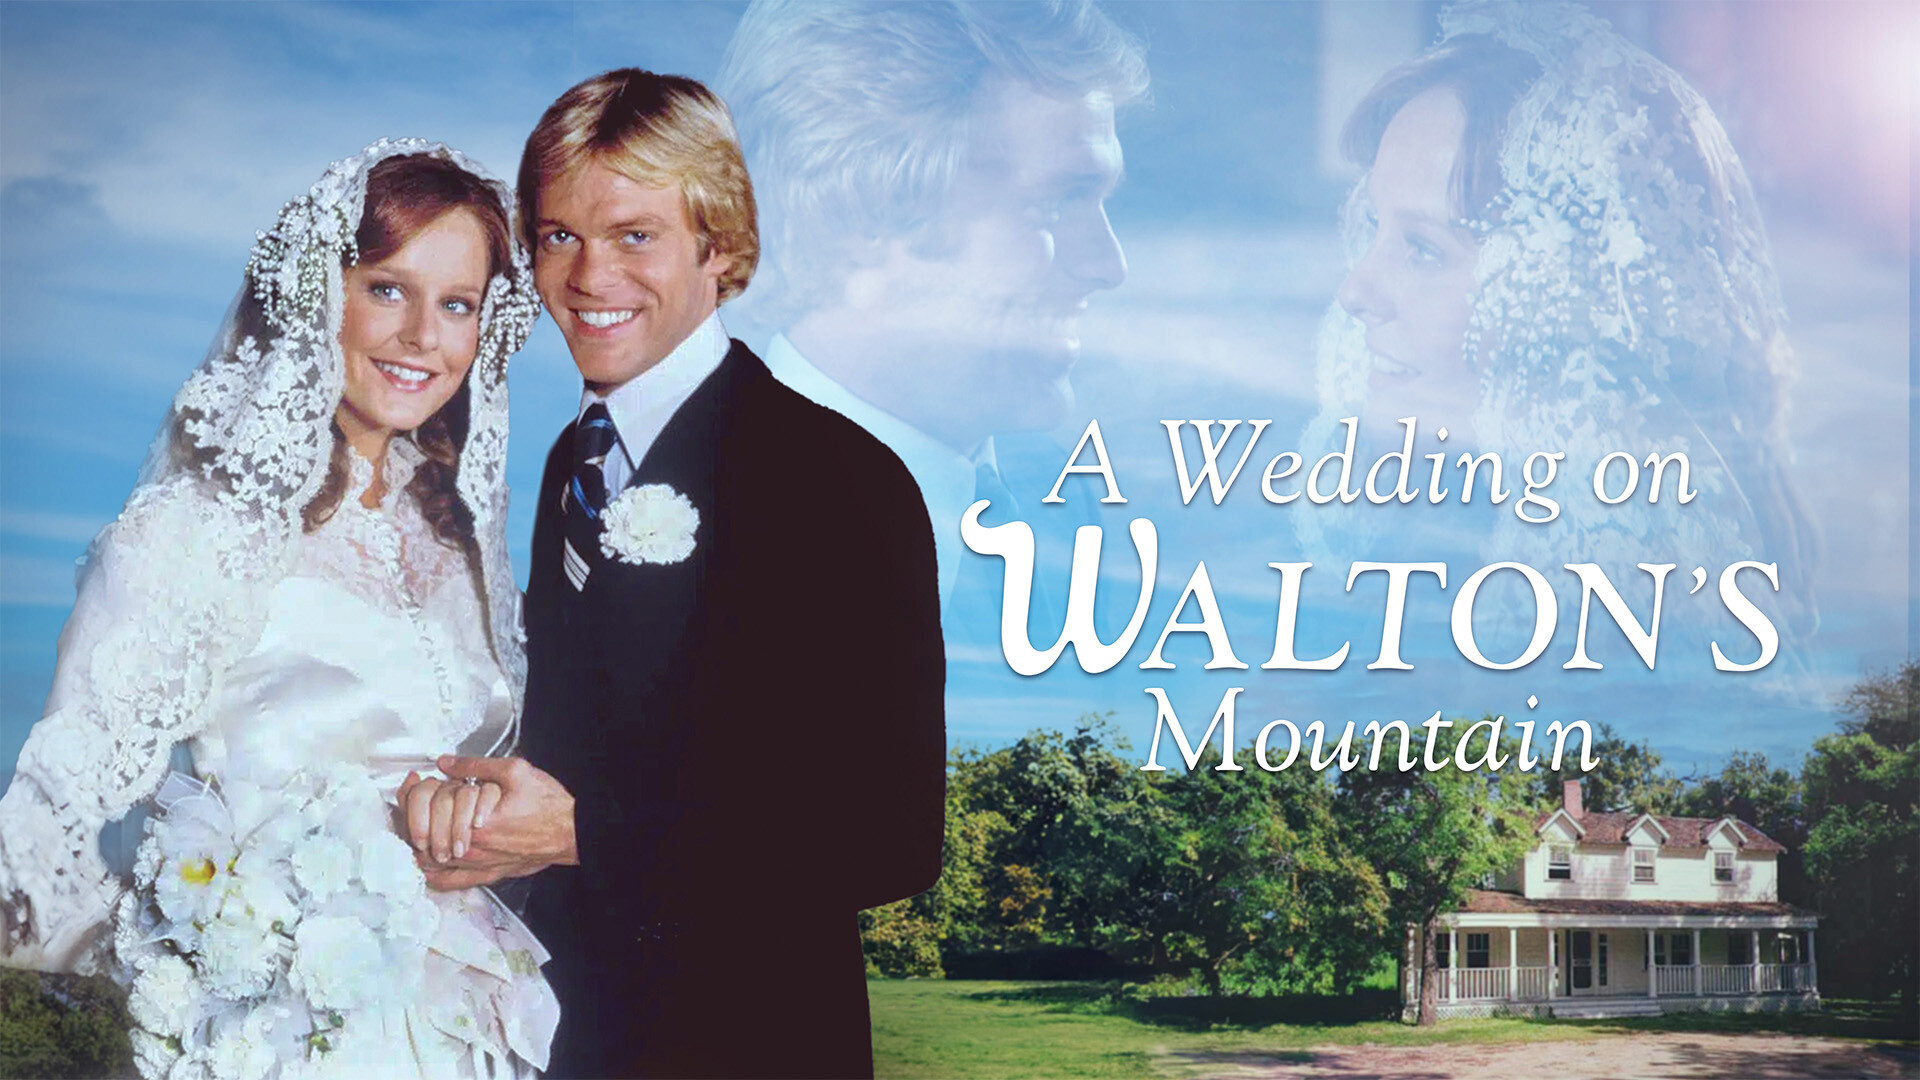 A wedding on waltons mountain